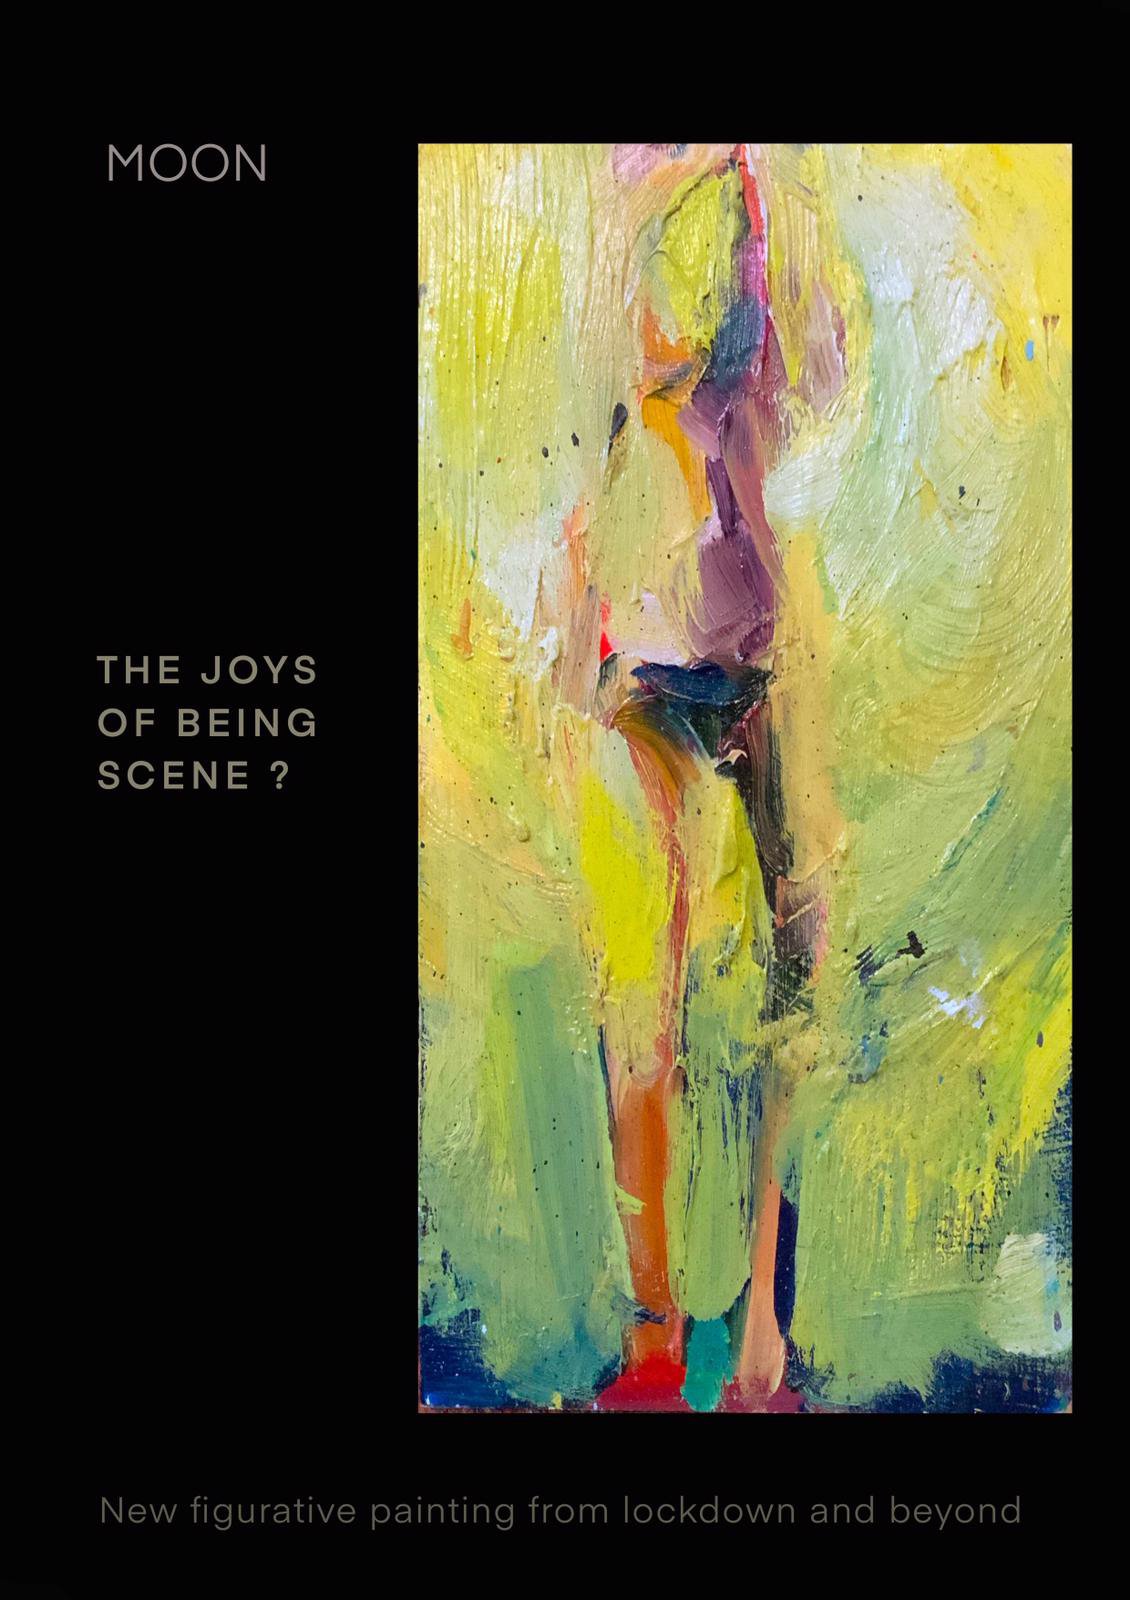 The Joys of being Scene? - Chris Moon